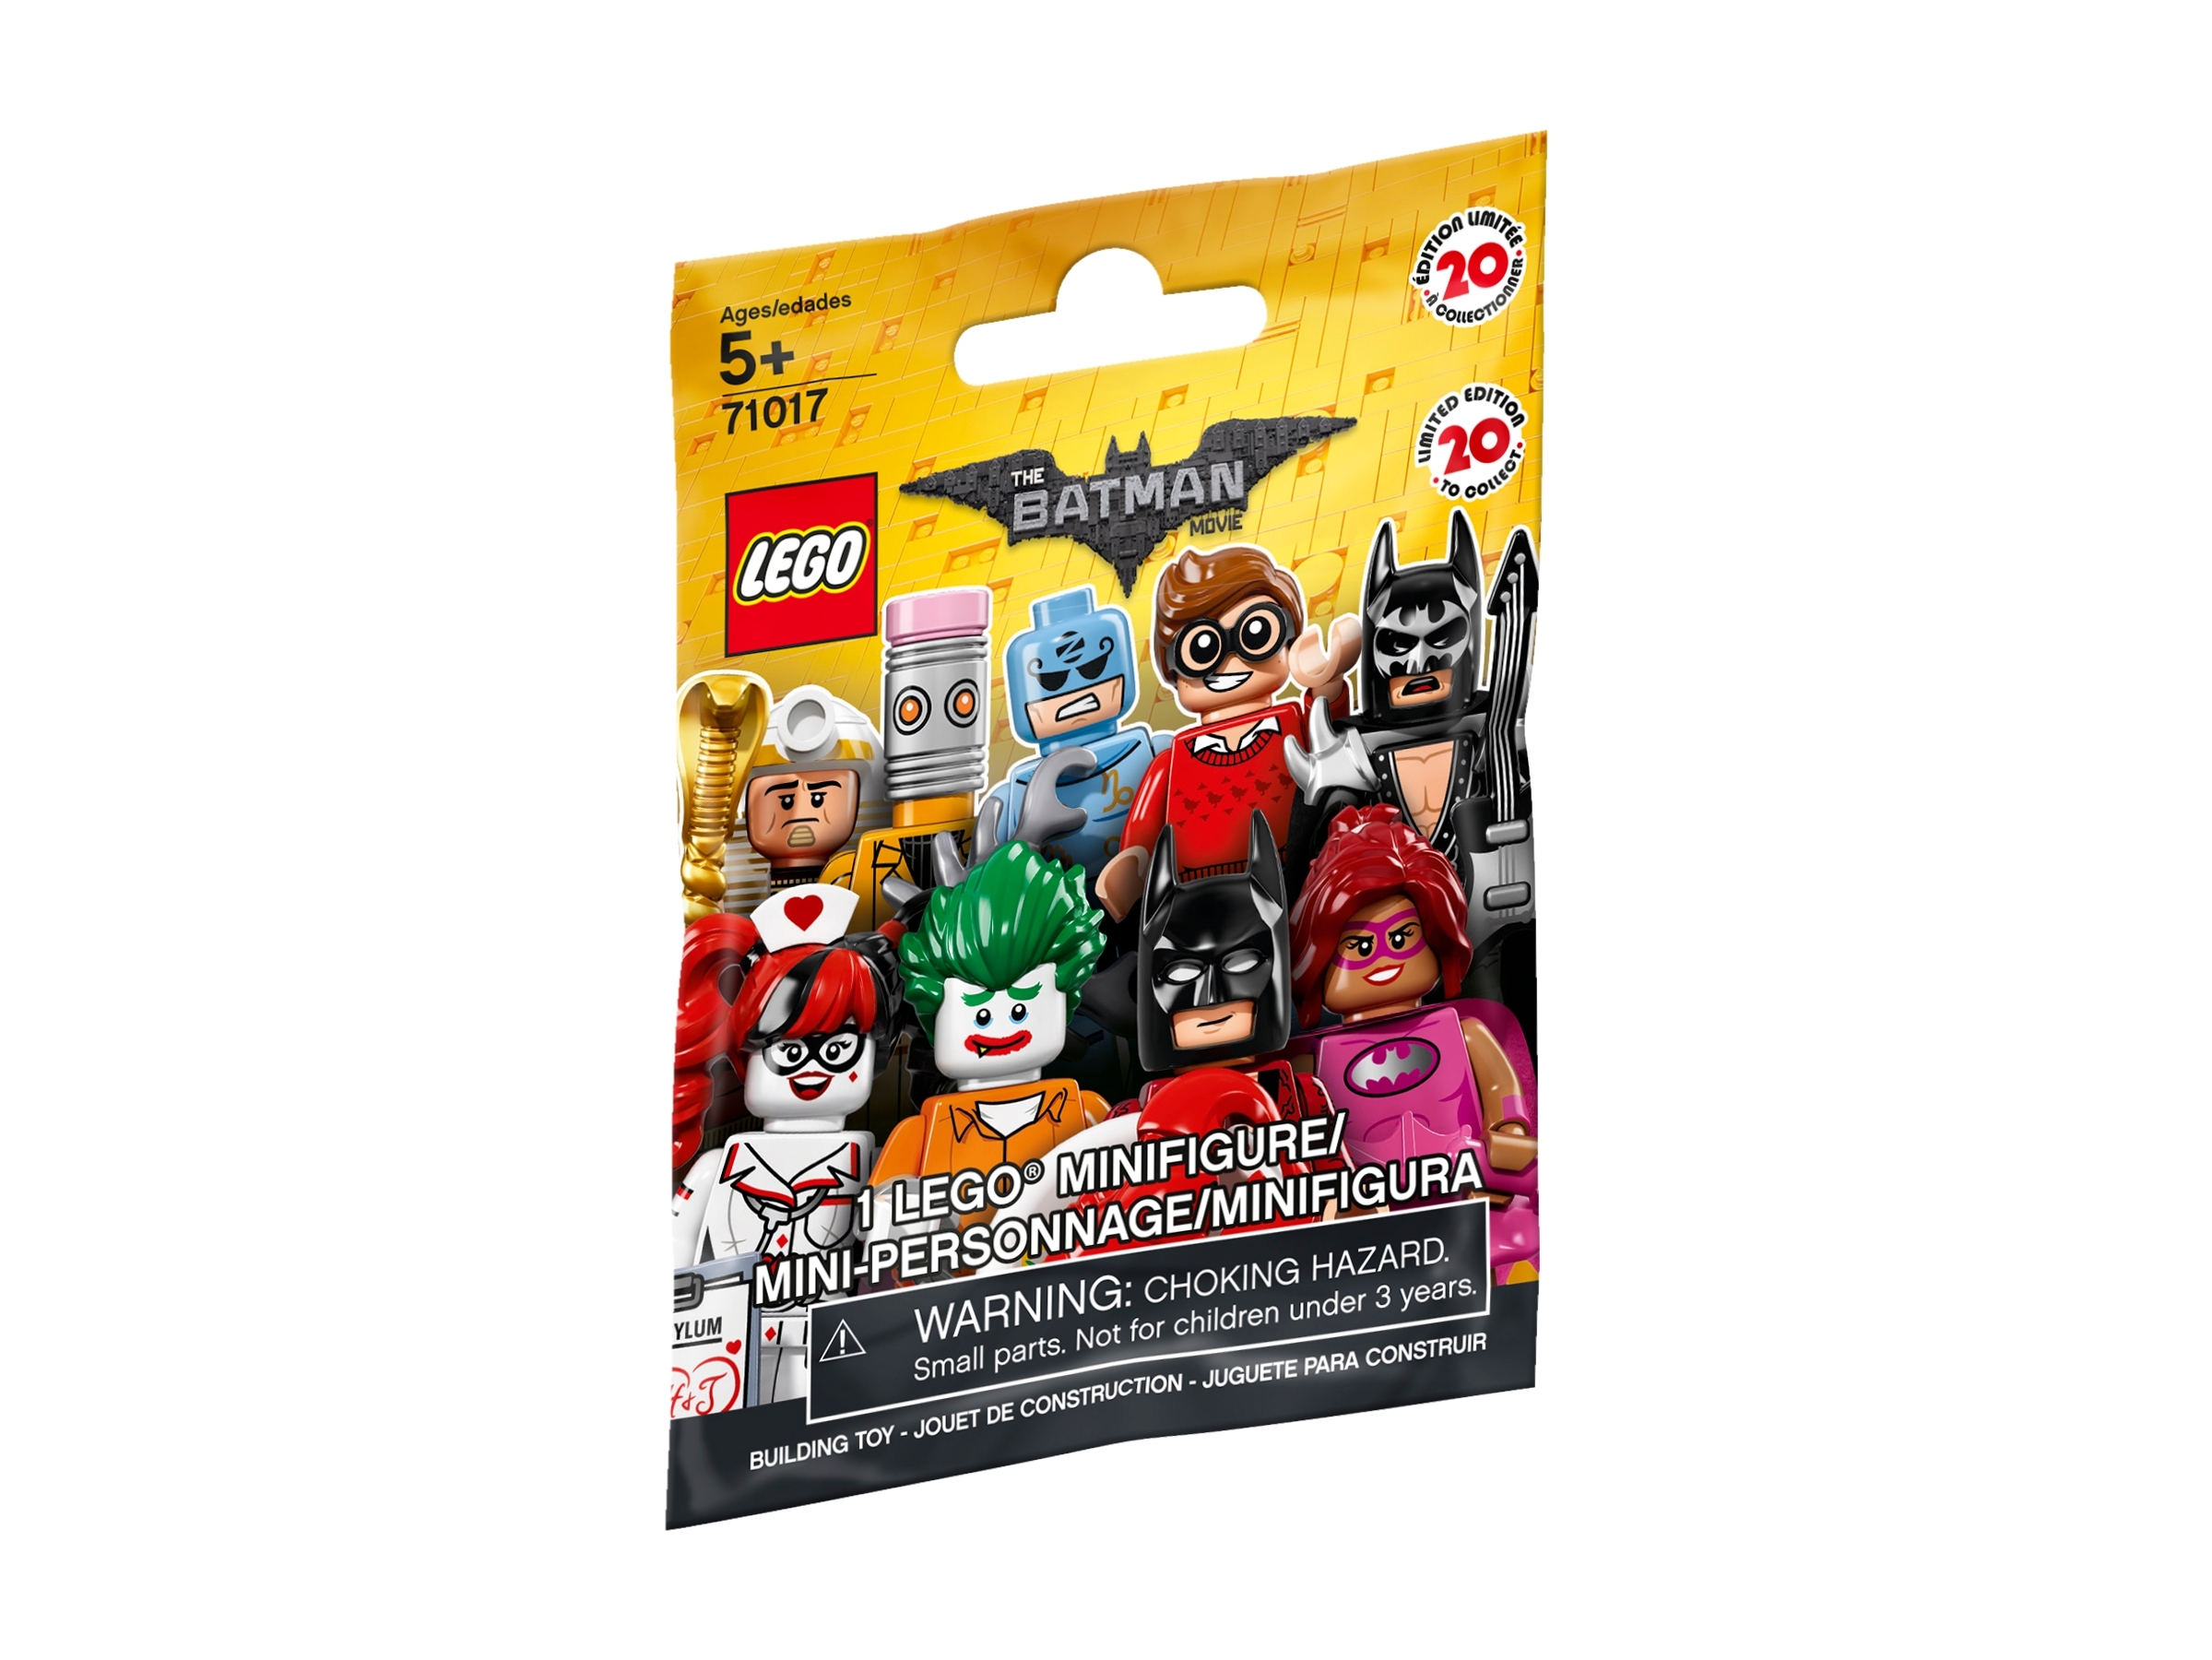 LEGO Minifigures 71017 Batman Movie Series 1 Pick Your Own Buildable Figure 